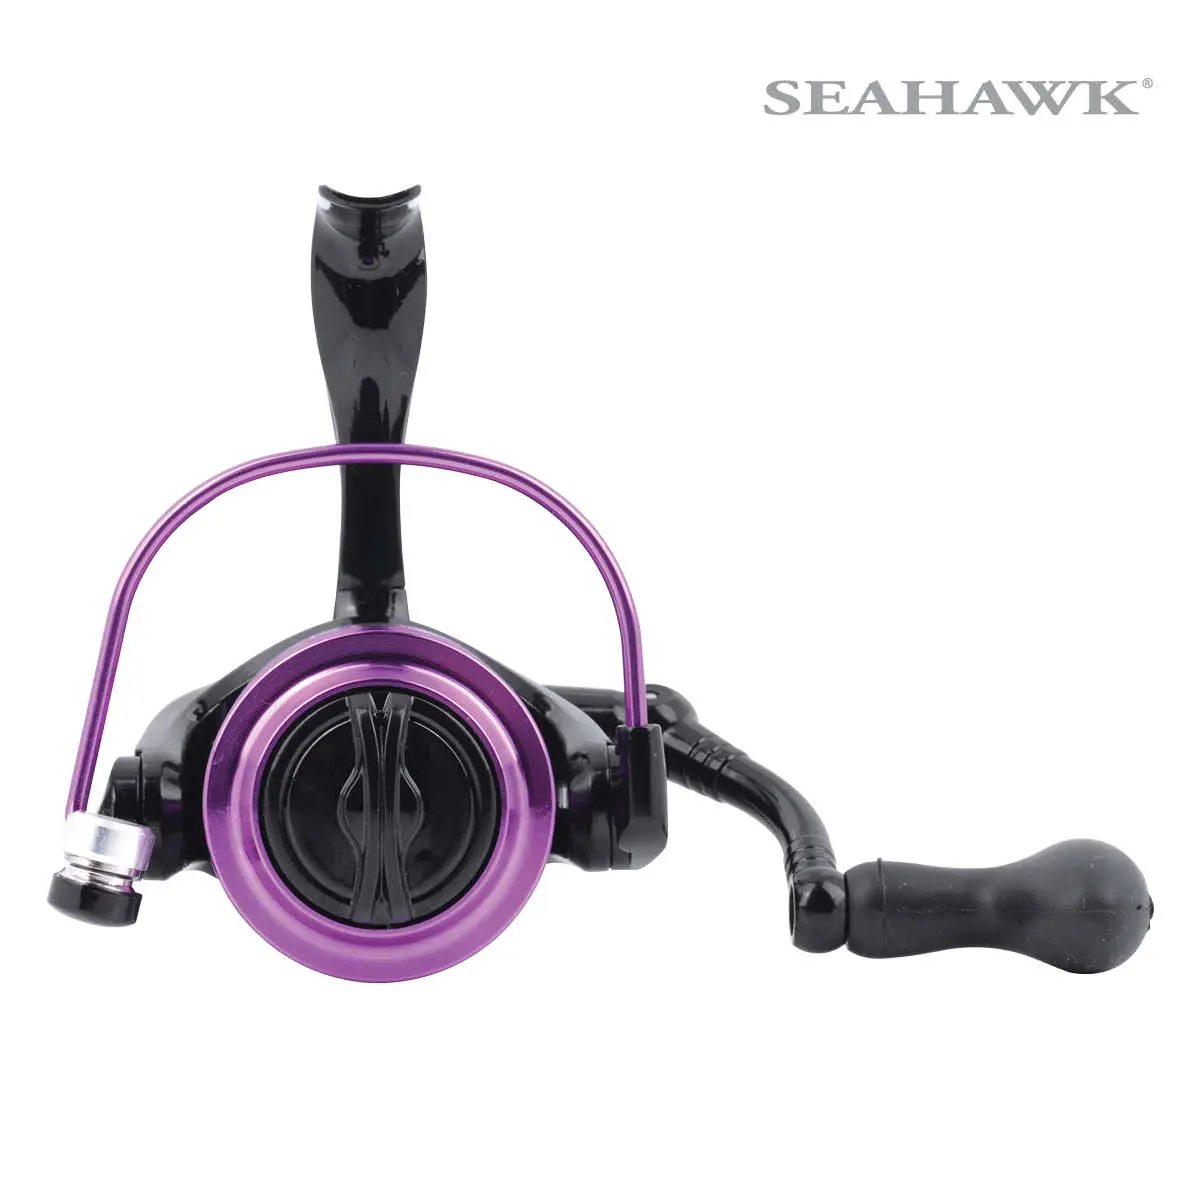 Seahawk instinct combo shakespeare conquest rod - Sports